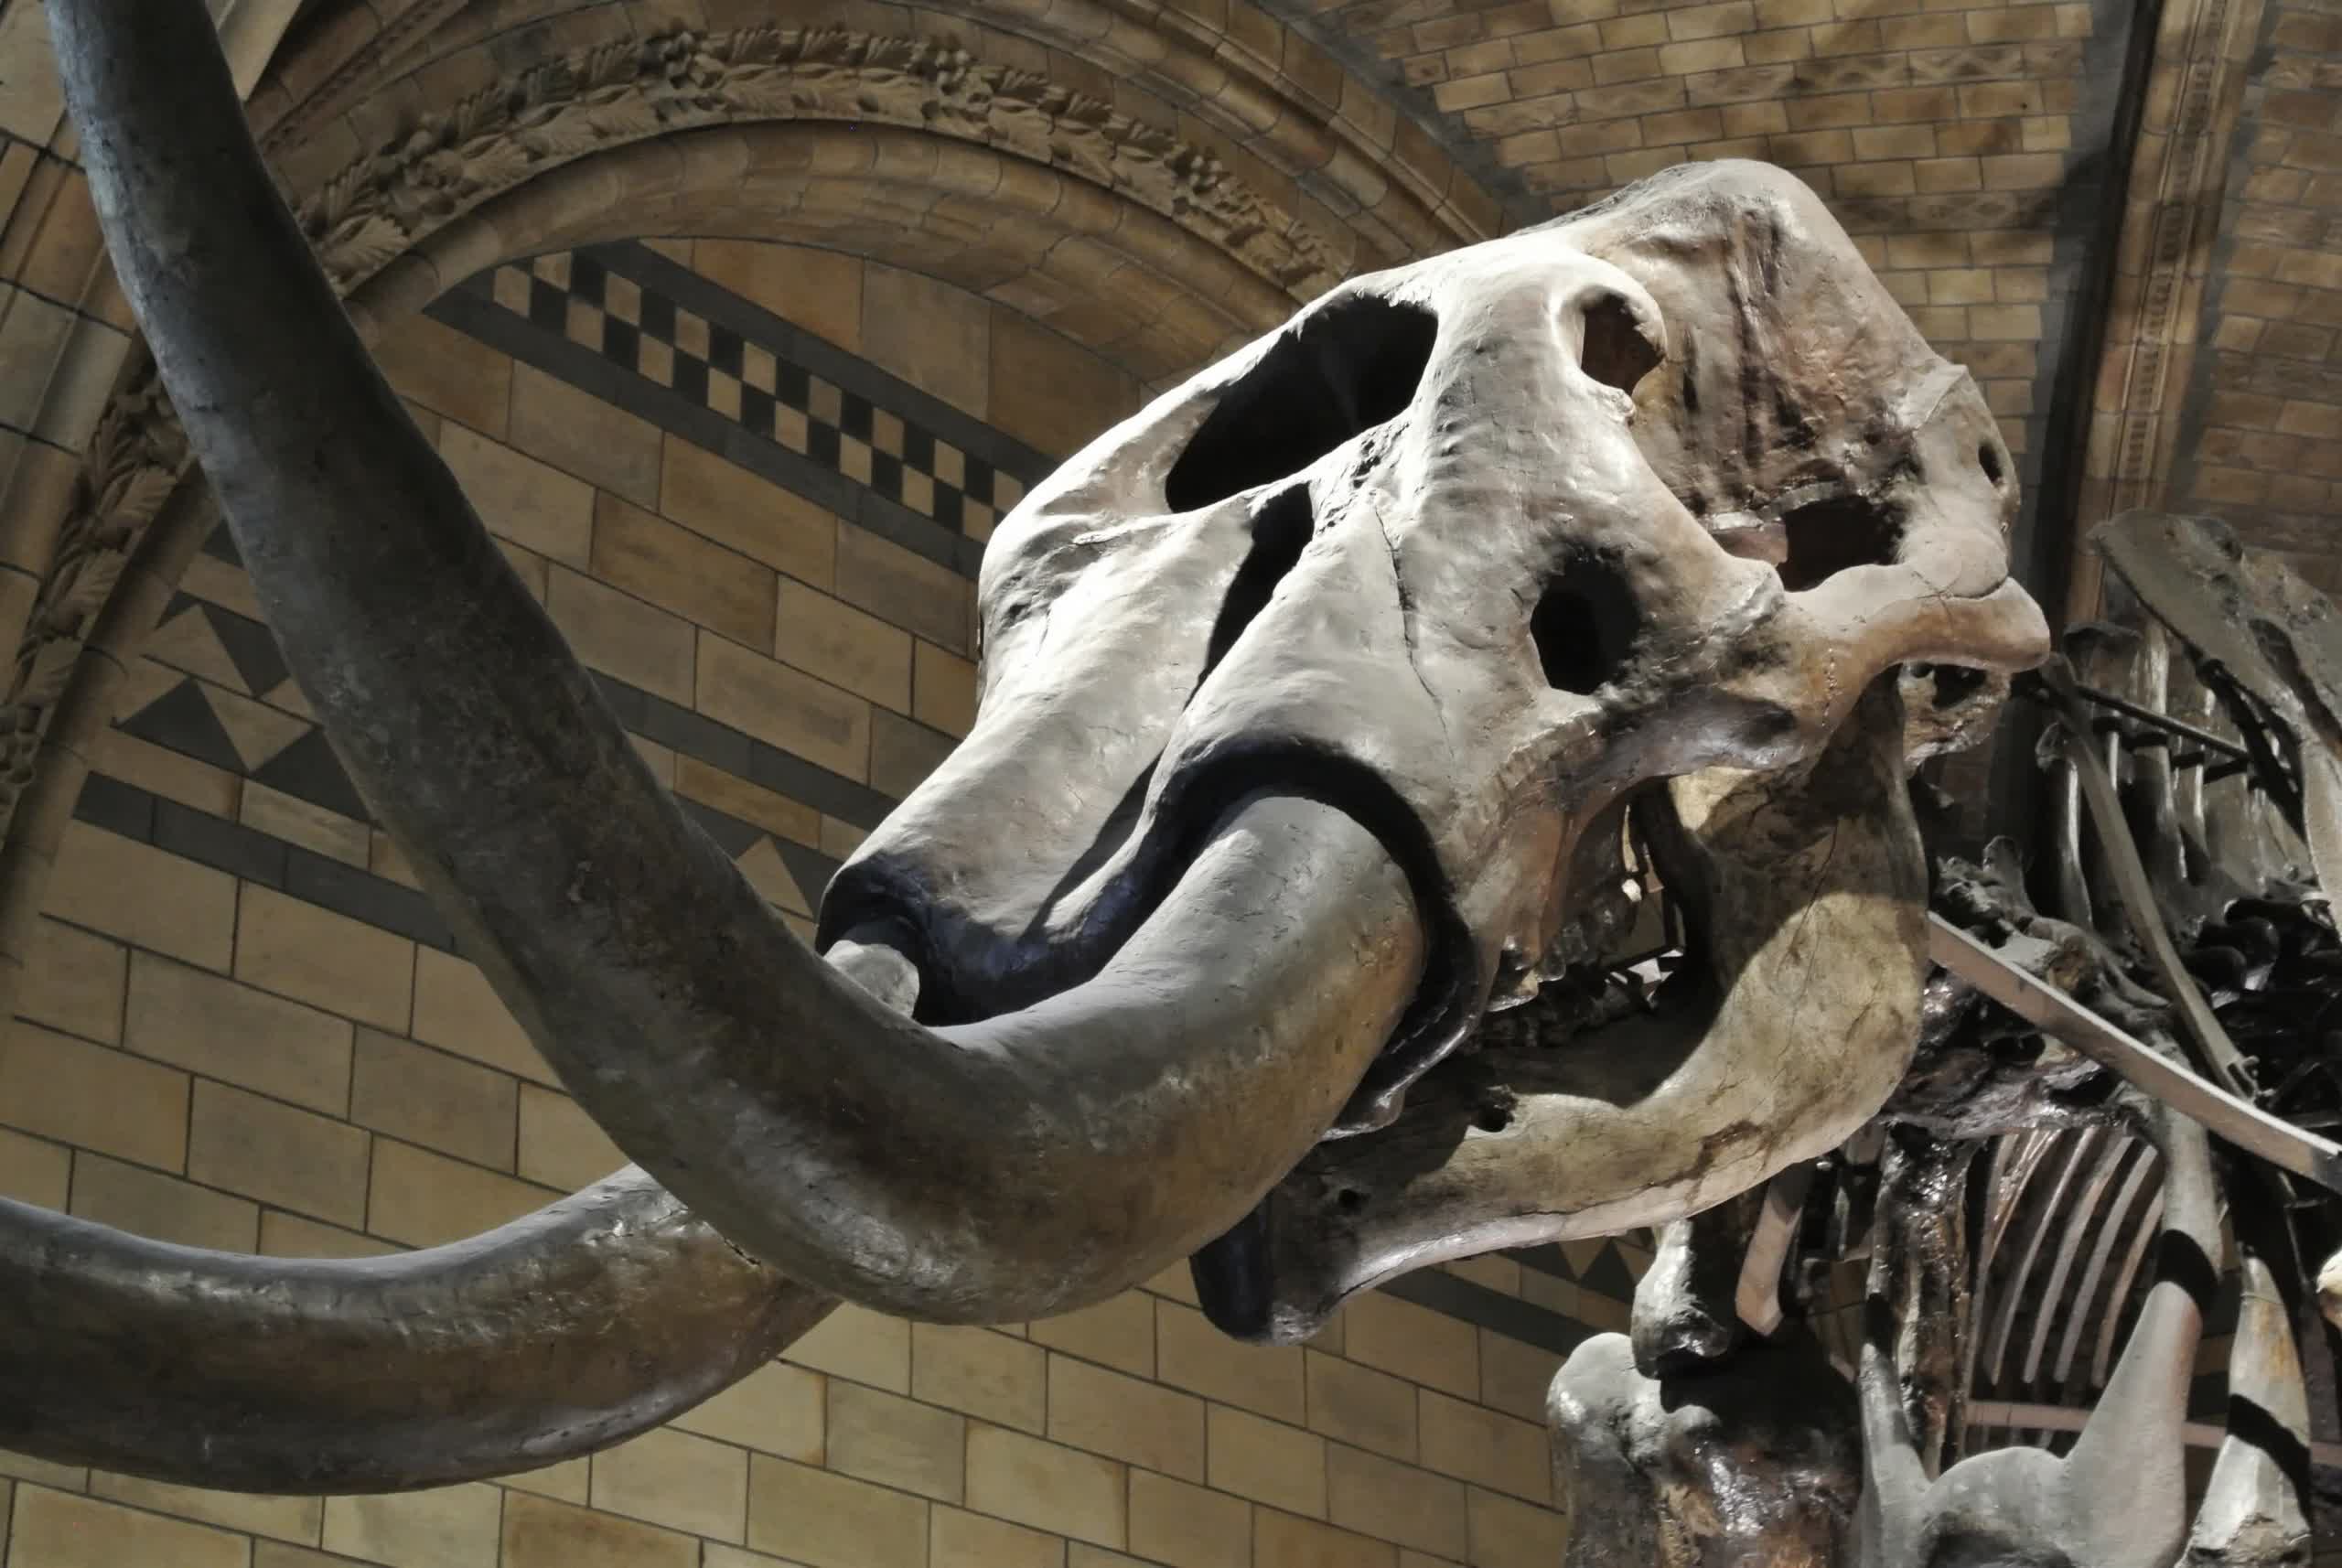 Virtual profanity filter bans the word Bone at a paleontology conference